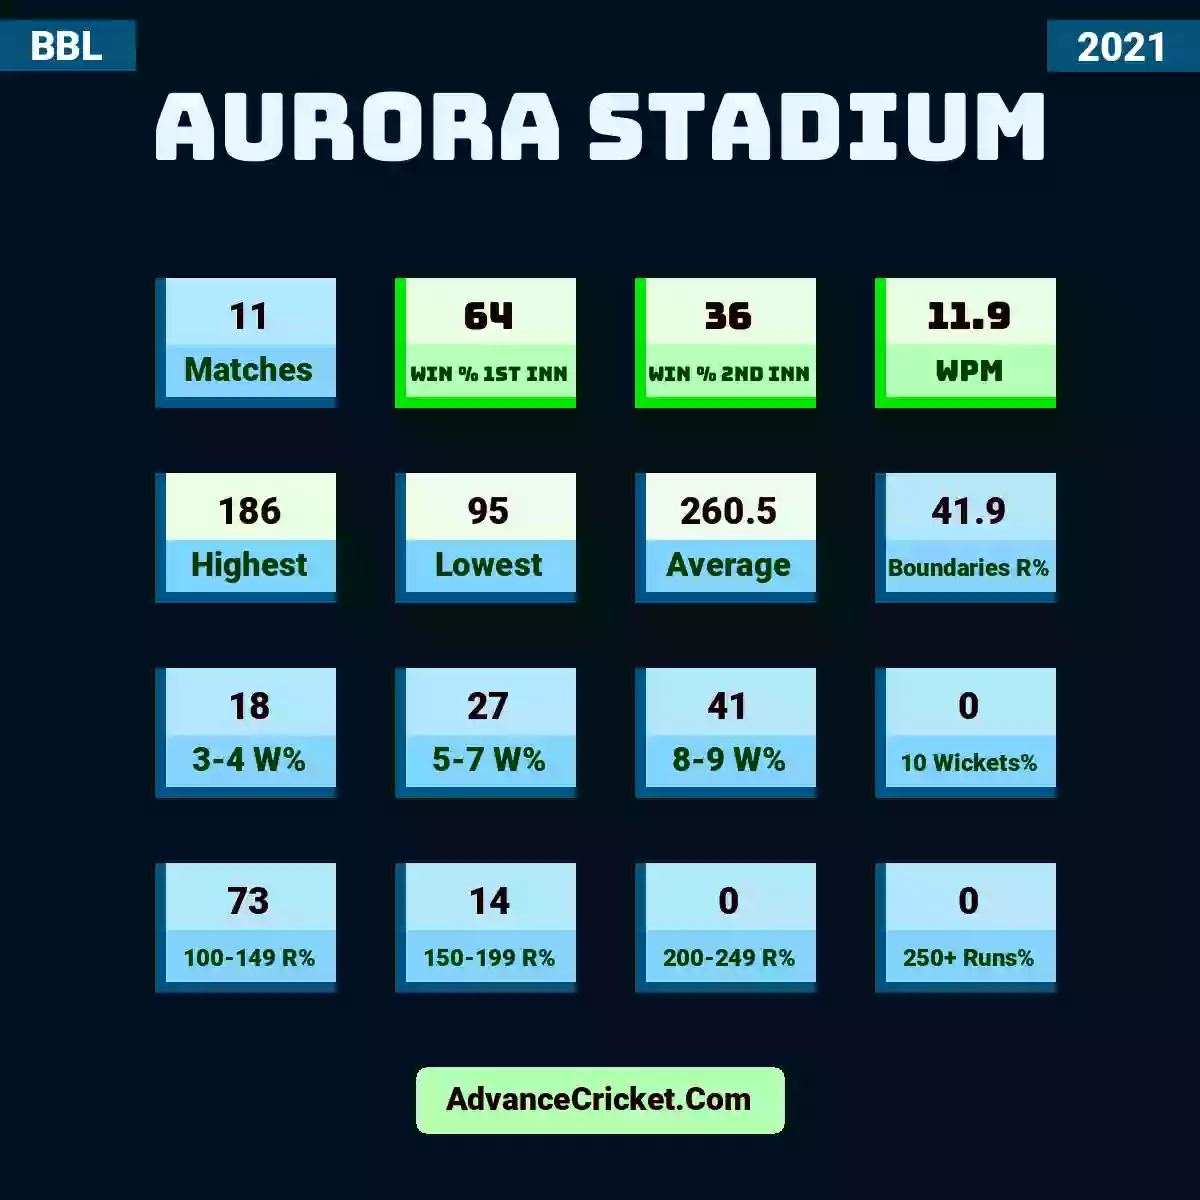 Image showing Aurora Stadium with Matches: 11, Win % 1st Inn: 64, Win % 2nd Inn: 36, WPM: 11.9, Highest: 186, Lowest: 95, Average: 260.5, Boundaries R%: 41.9, 3-4 W%: 18, 5-7 W%: 27, 8-9 W%: 41, 10 Wickets%: 0, 100-149 R%: 73, 150-199 R%: 14, 200-249 R%: 0, 250+ Runs%: 0.